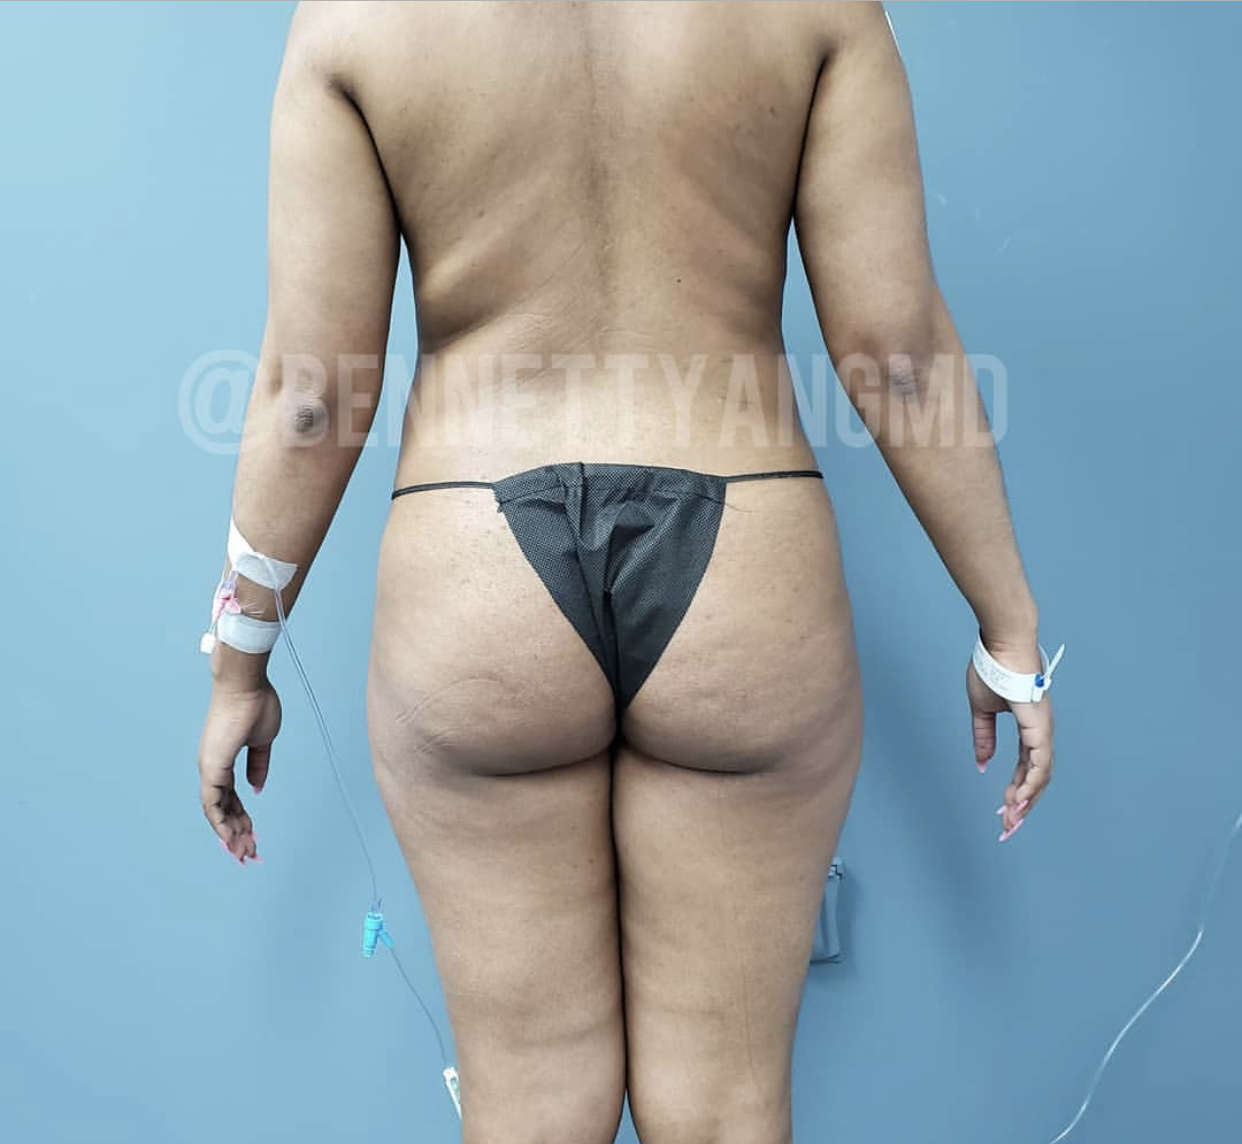 DMV BBL Plastic Surgeon, Brazilian Butt Lift Top Surgeon Maryland